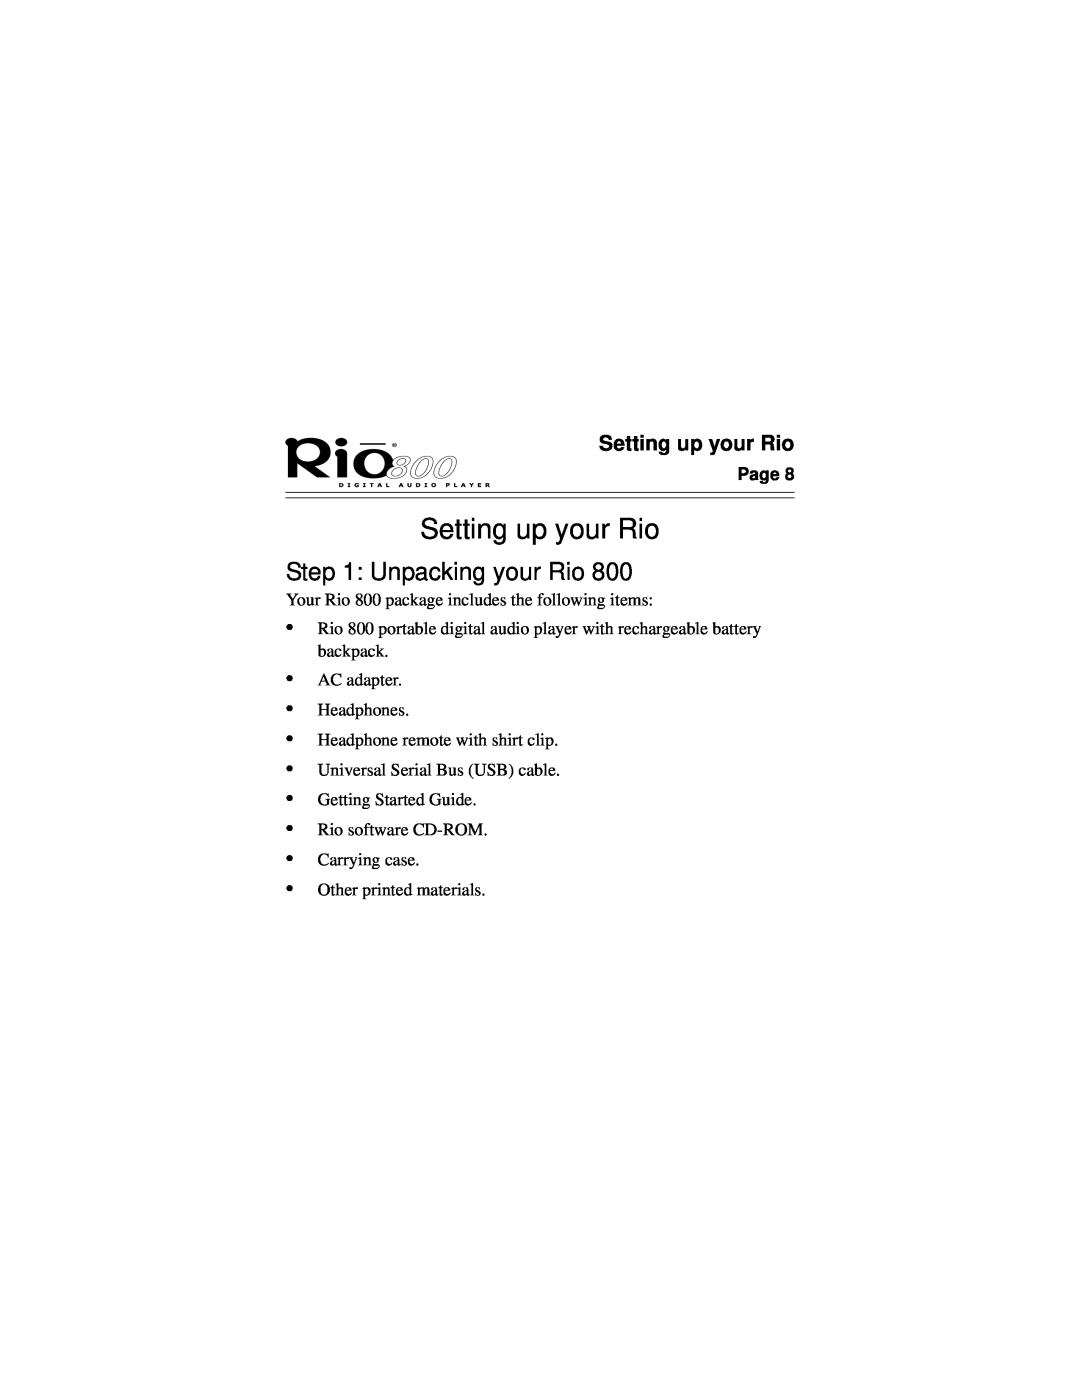 Rio Audio Rio 800 manual Setting up your Rio, Unpacking your Rio 